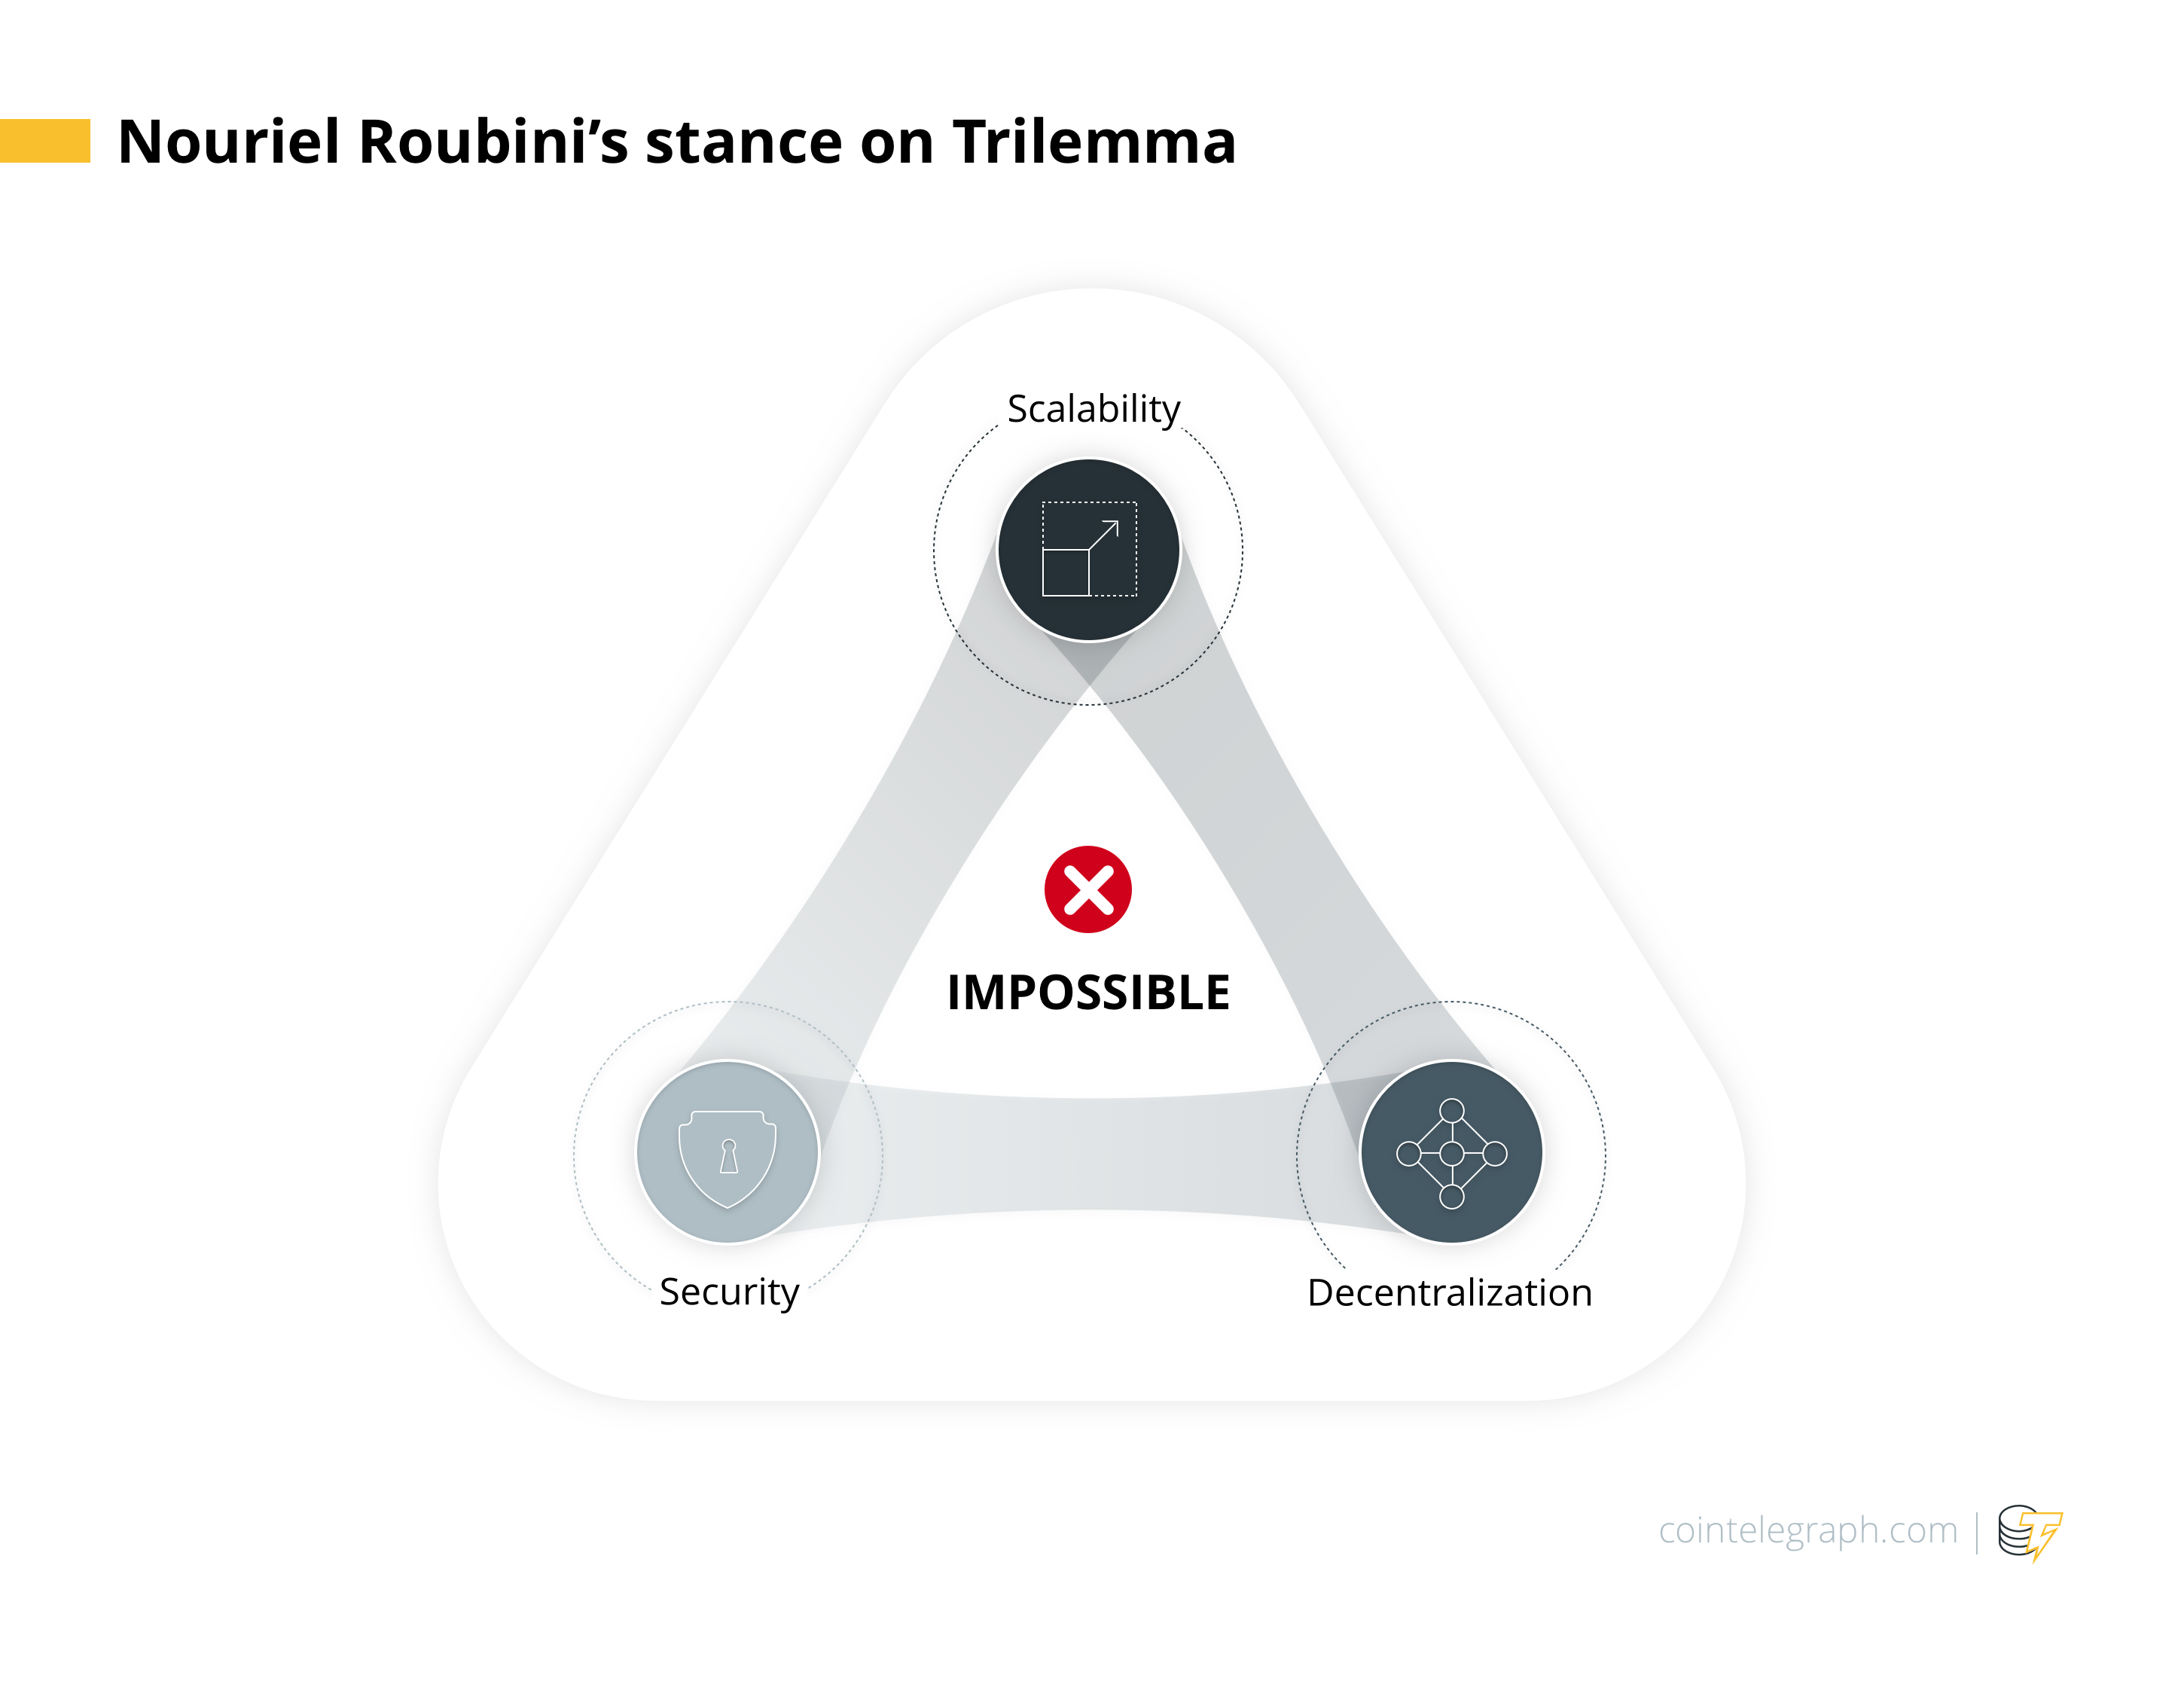 Nouriel Roubini’s stance on Trilemma